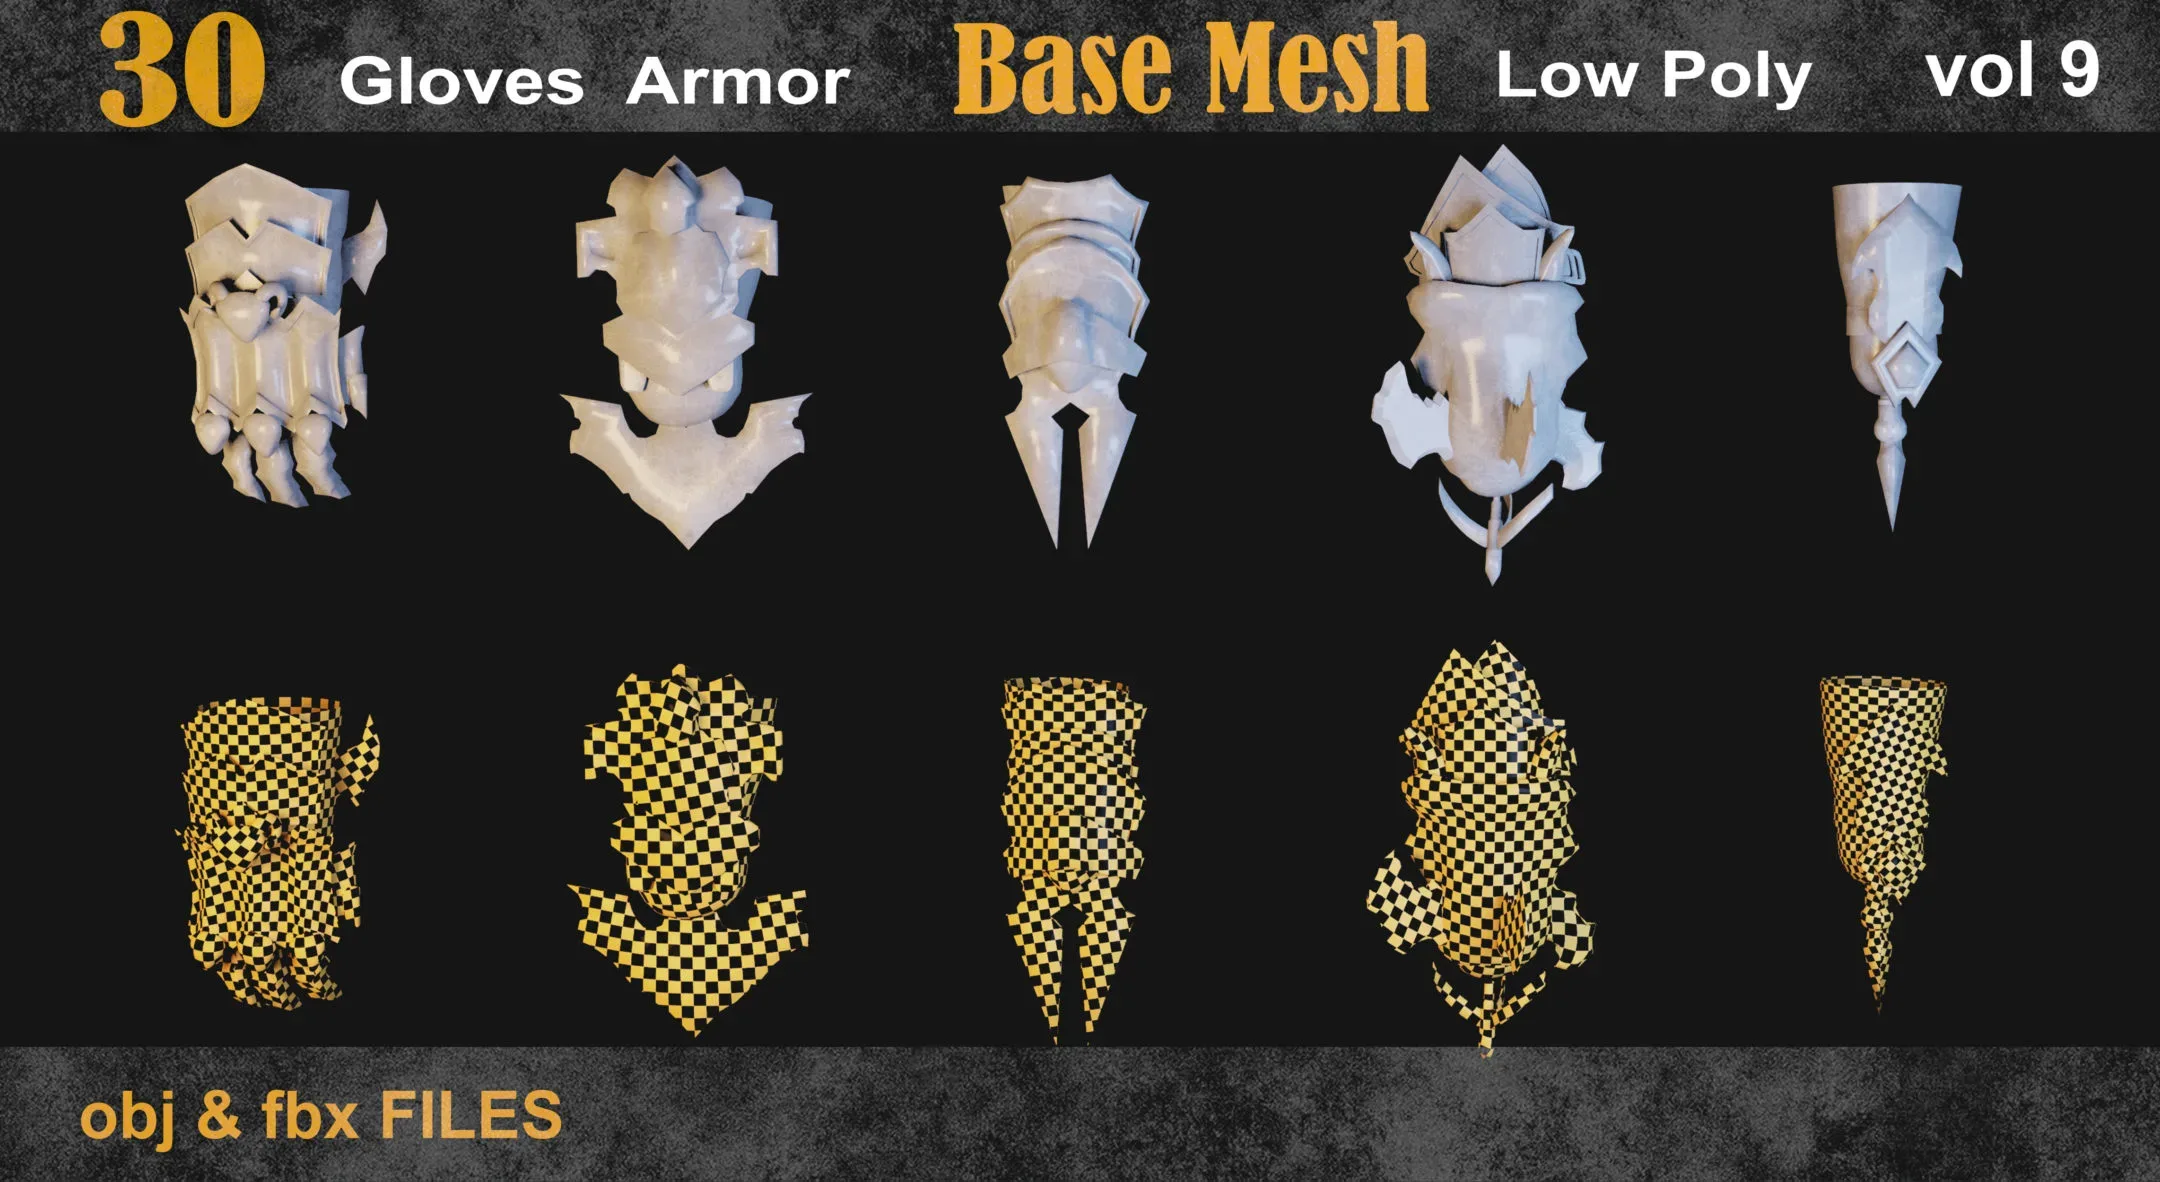 30 Gloves Armor Base Mesh vol 9